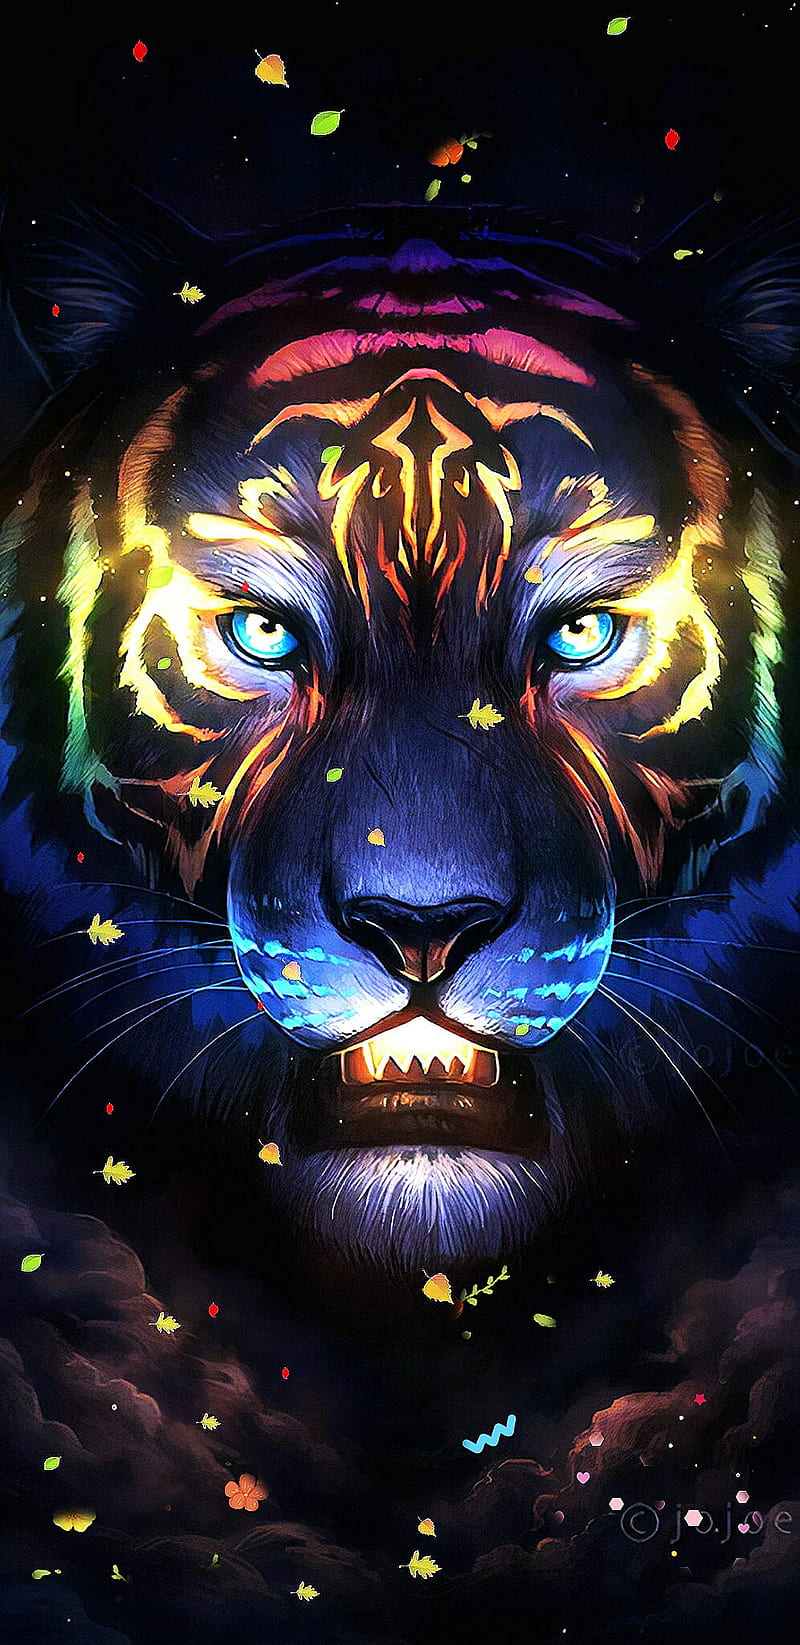 Cosmic Lion - Wallpaper by Fleimer on DeviantArt